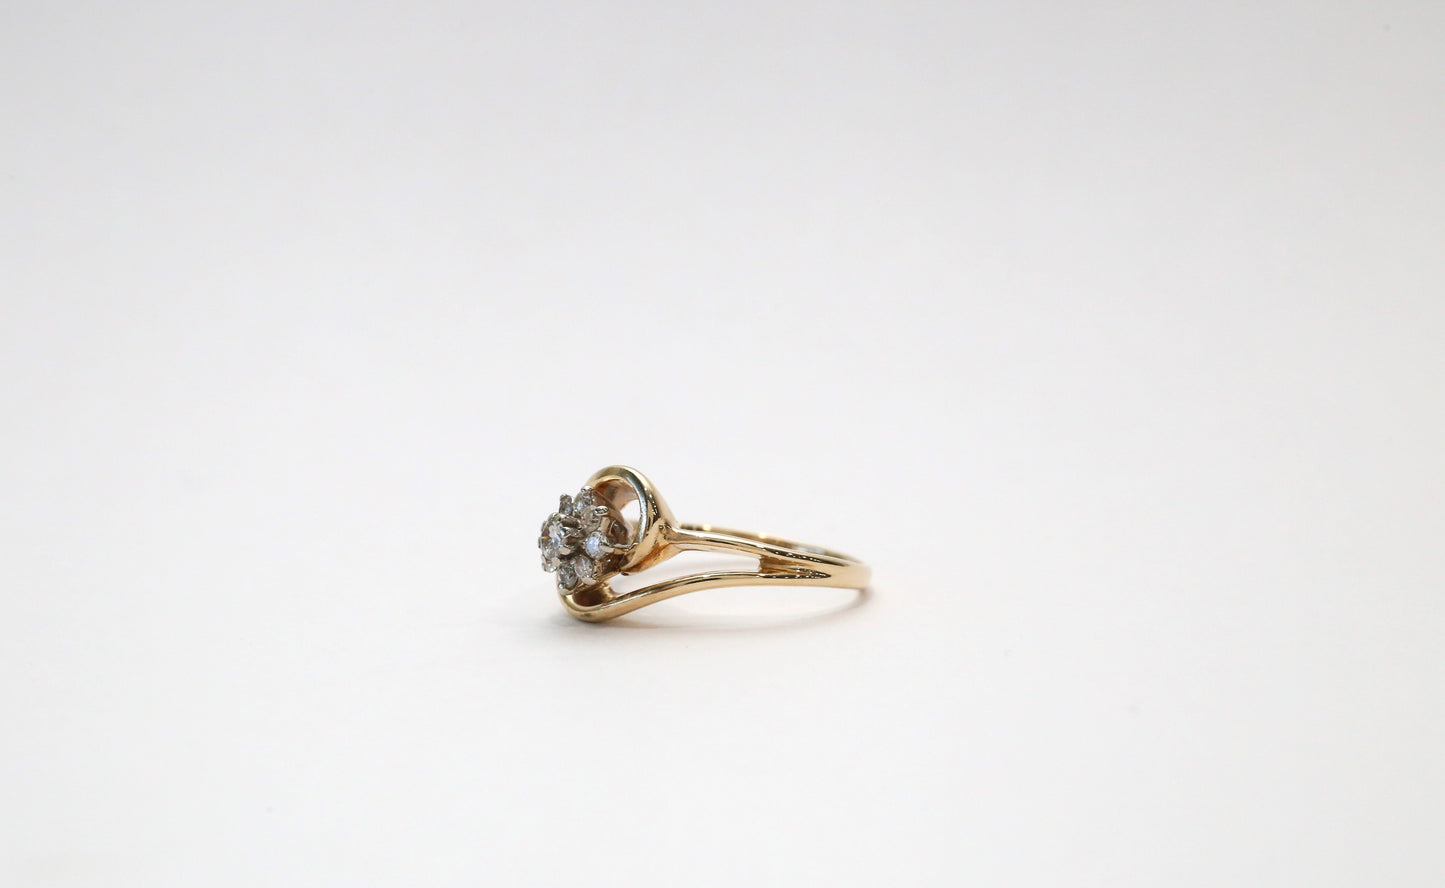 14k Yellow Gold Flower Diamond Ring, Size 6.75 - 3.2g